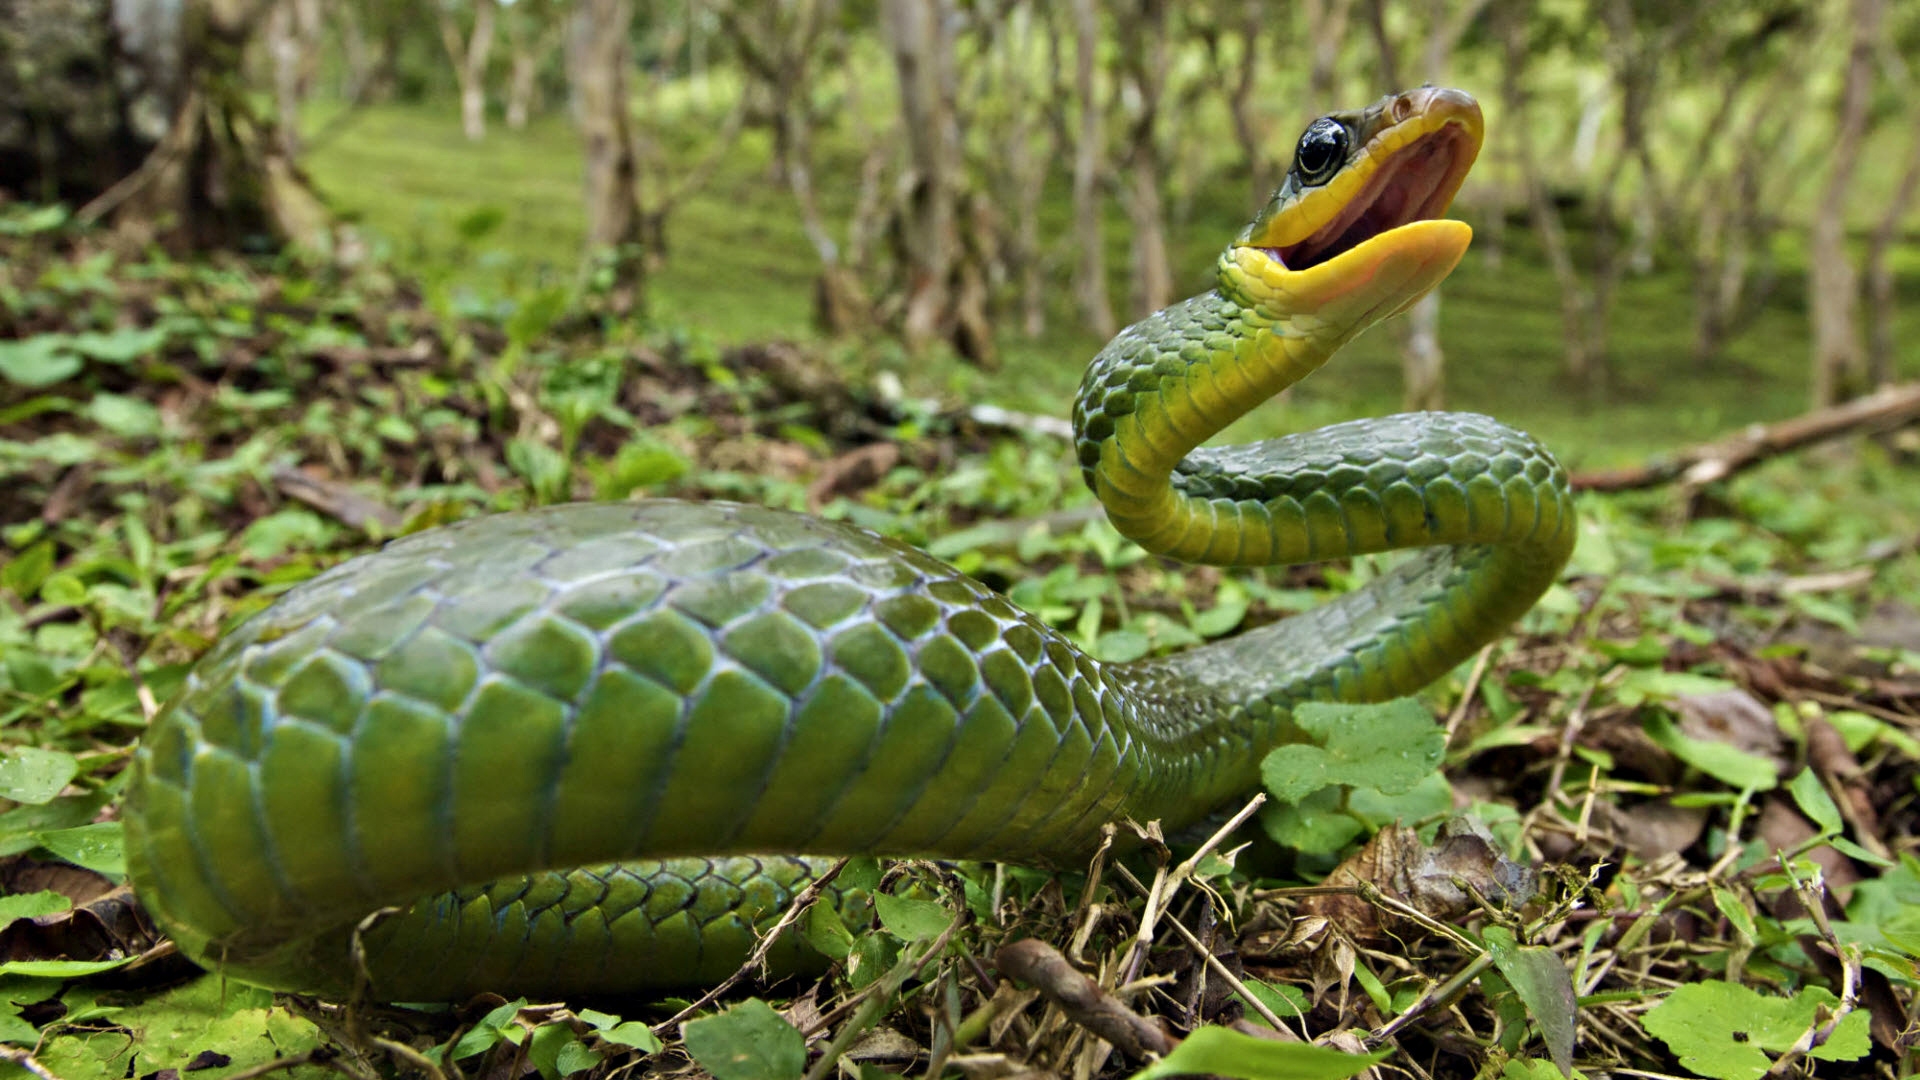 A little green snake in the grass.